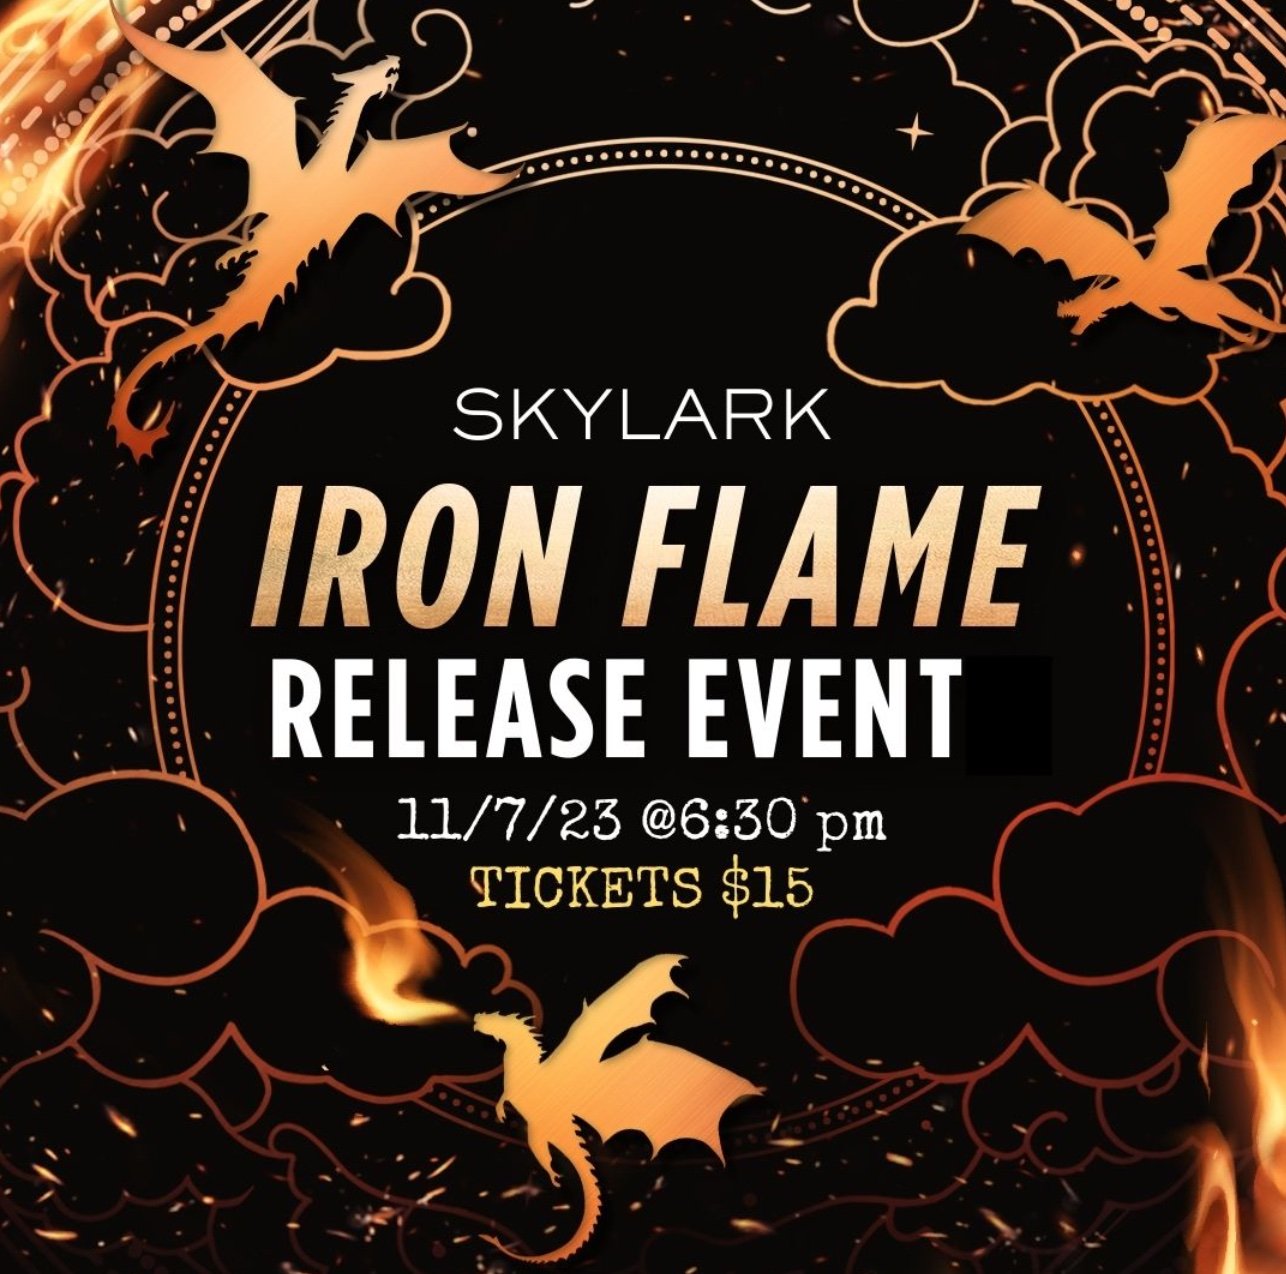 IRON FLAME launch party! Tuesday, November 7 @ 6:30 p.m. — skylark bookshop